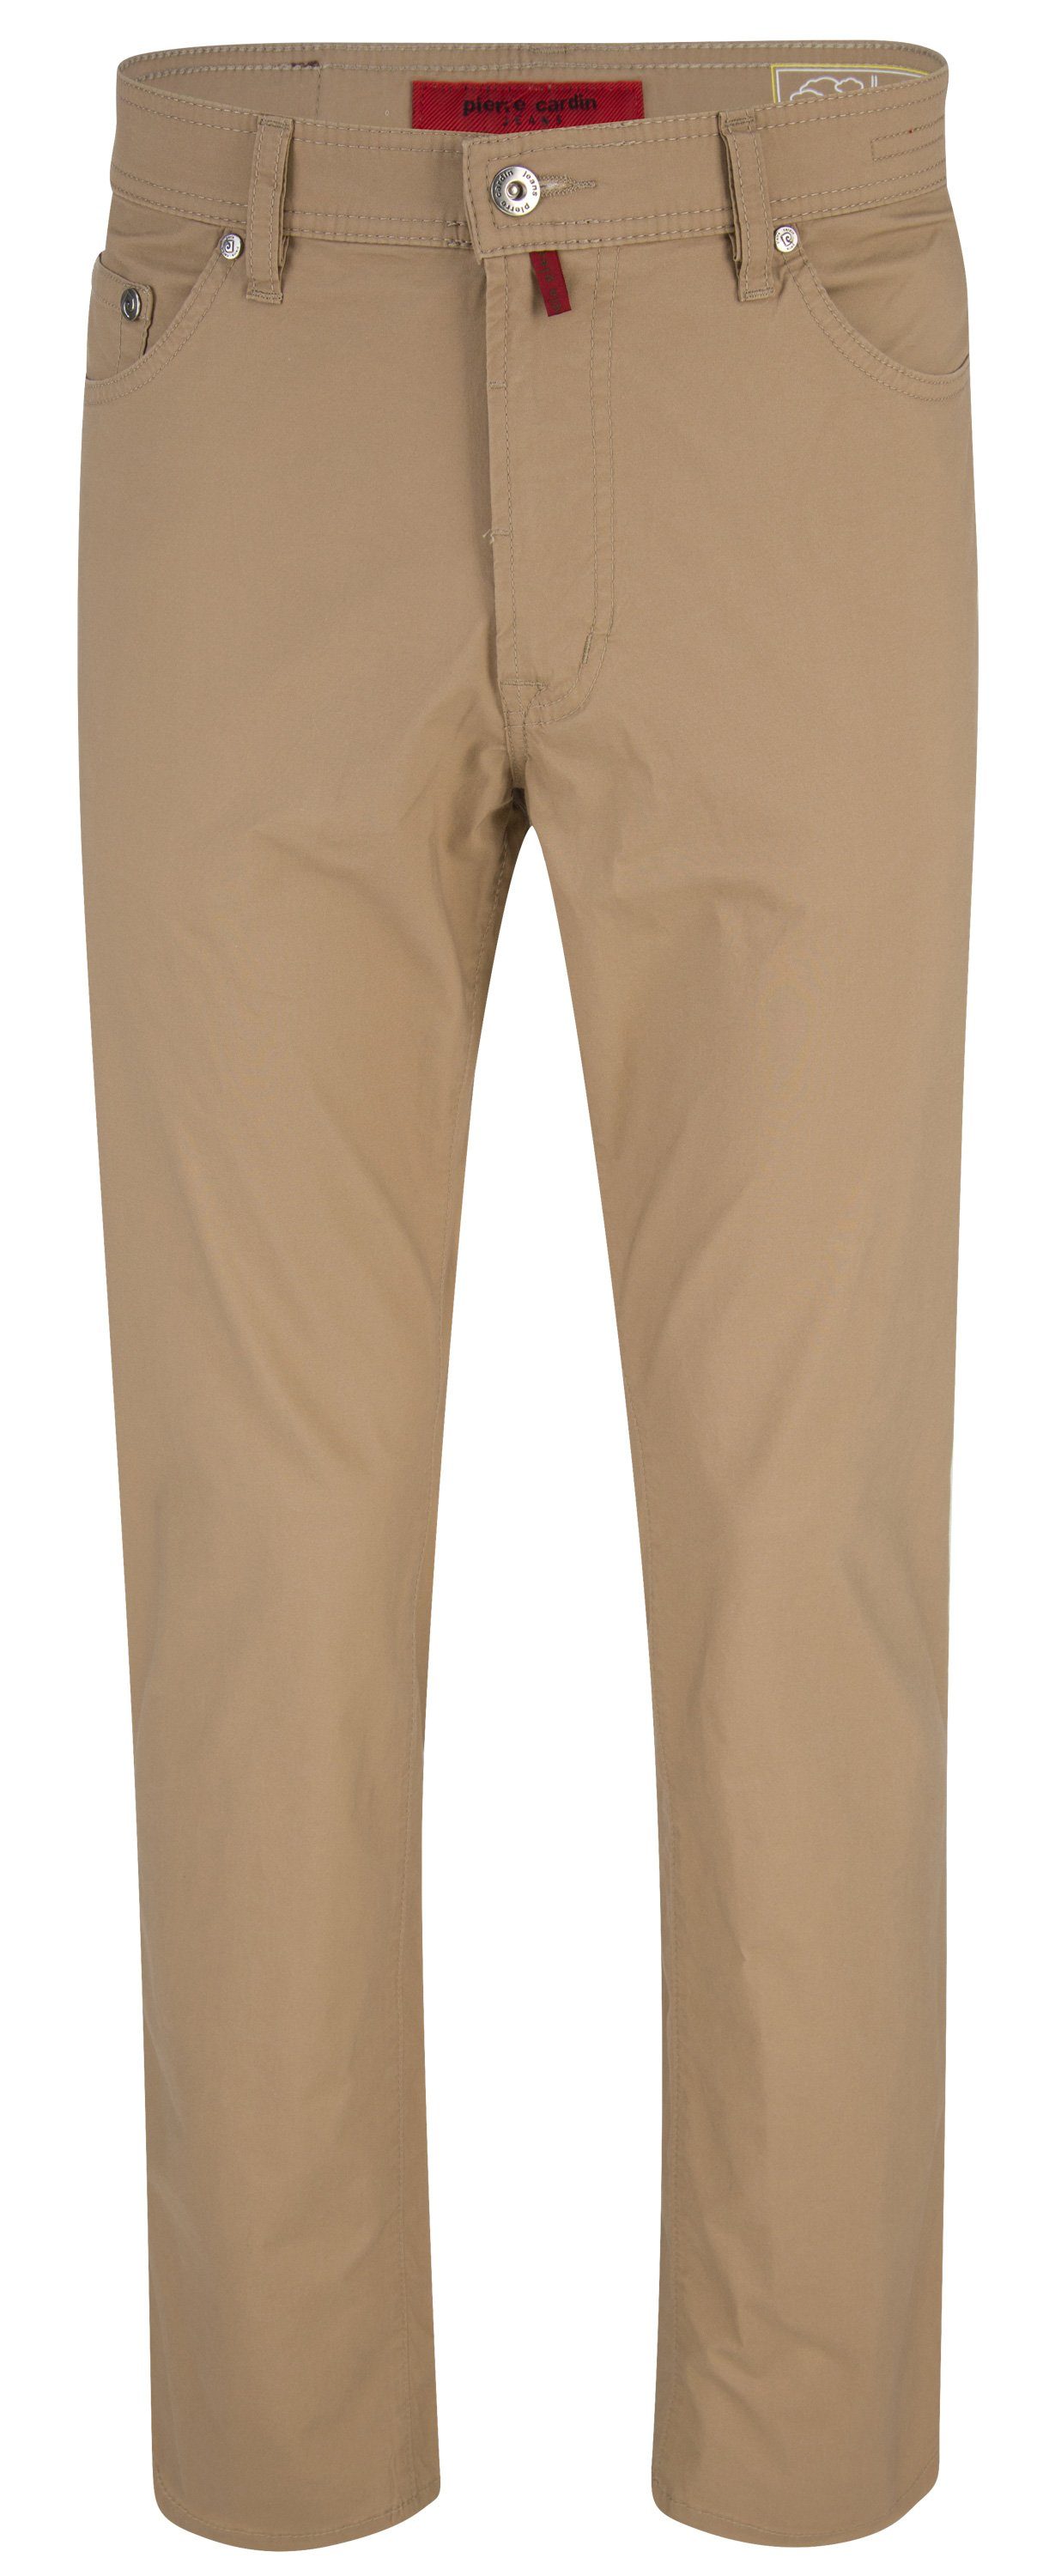 Pierre Cardin 5-Pocket-Jeans PIERRE CARDIN DEAUVILLE summer air touch beige 3196 444.25